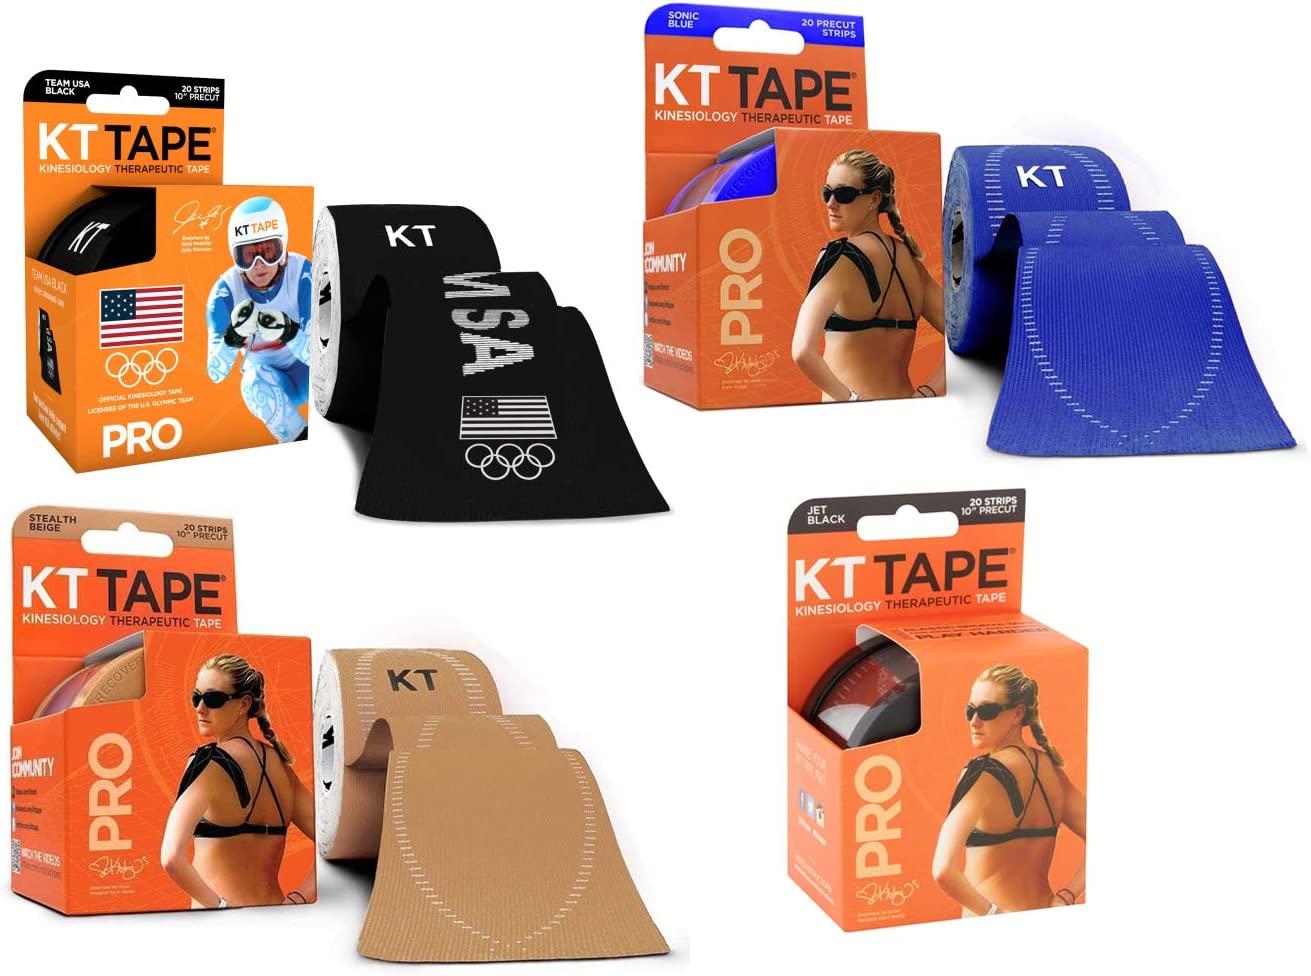 KT TAPE Original Cotton Kinesiology Tape 20 Precut Strips Black